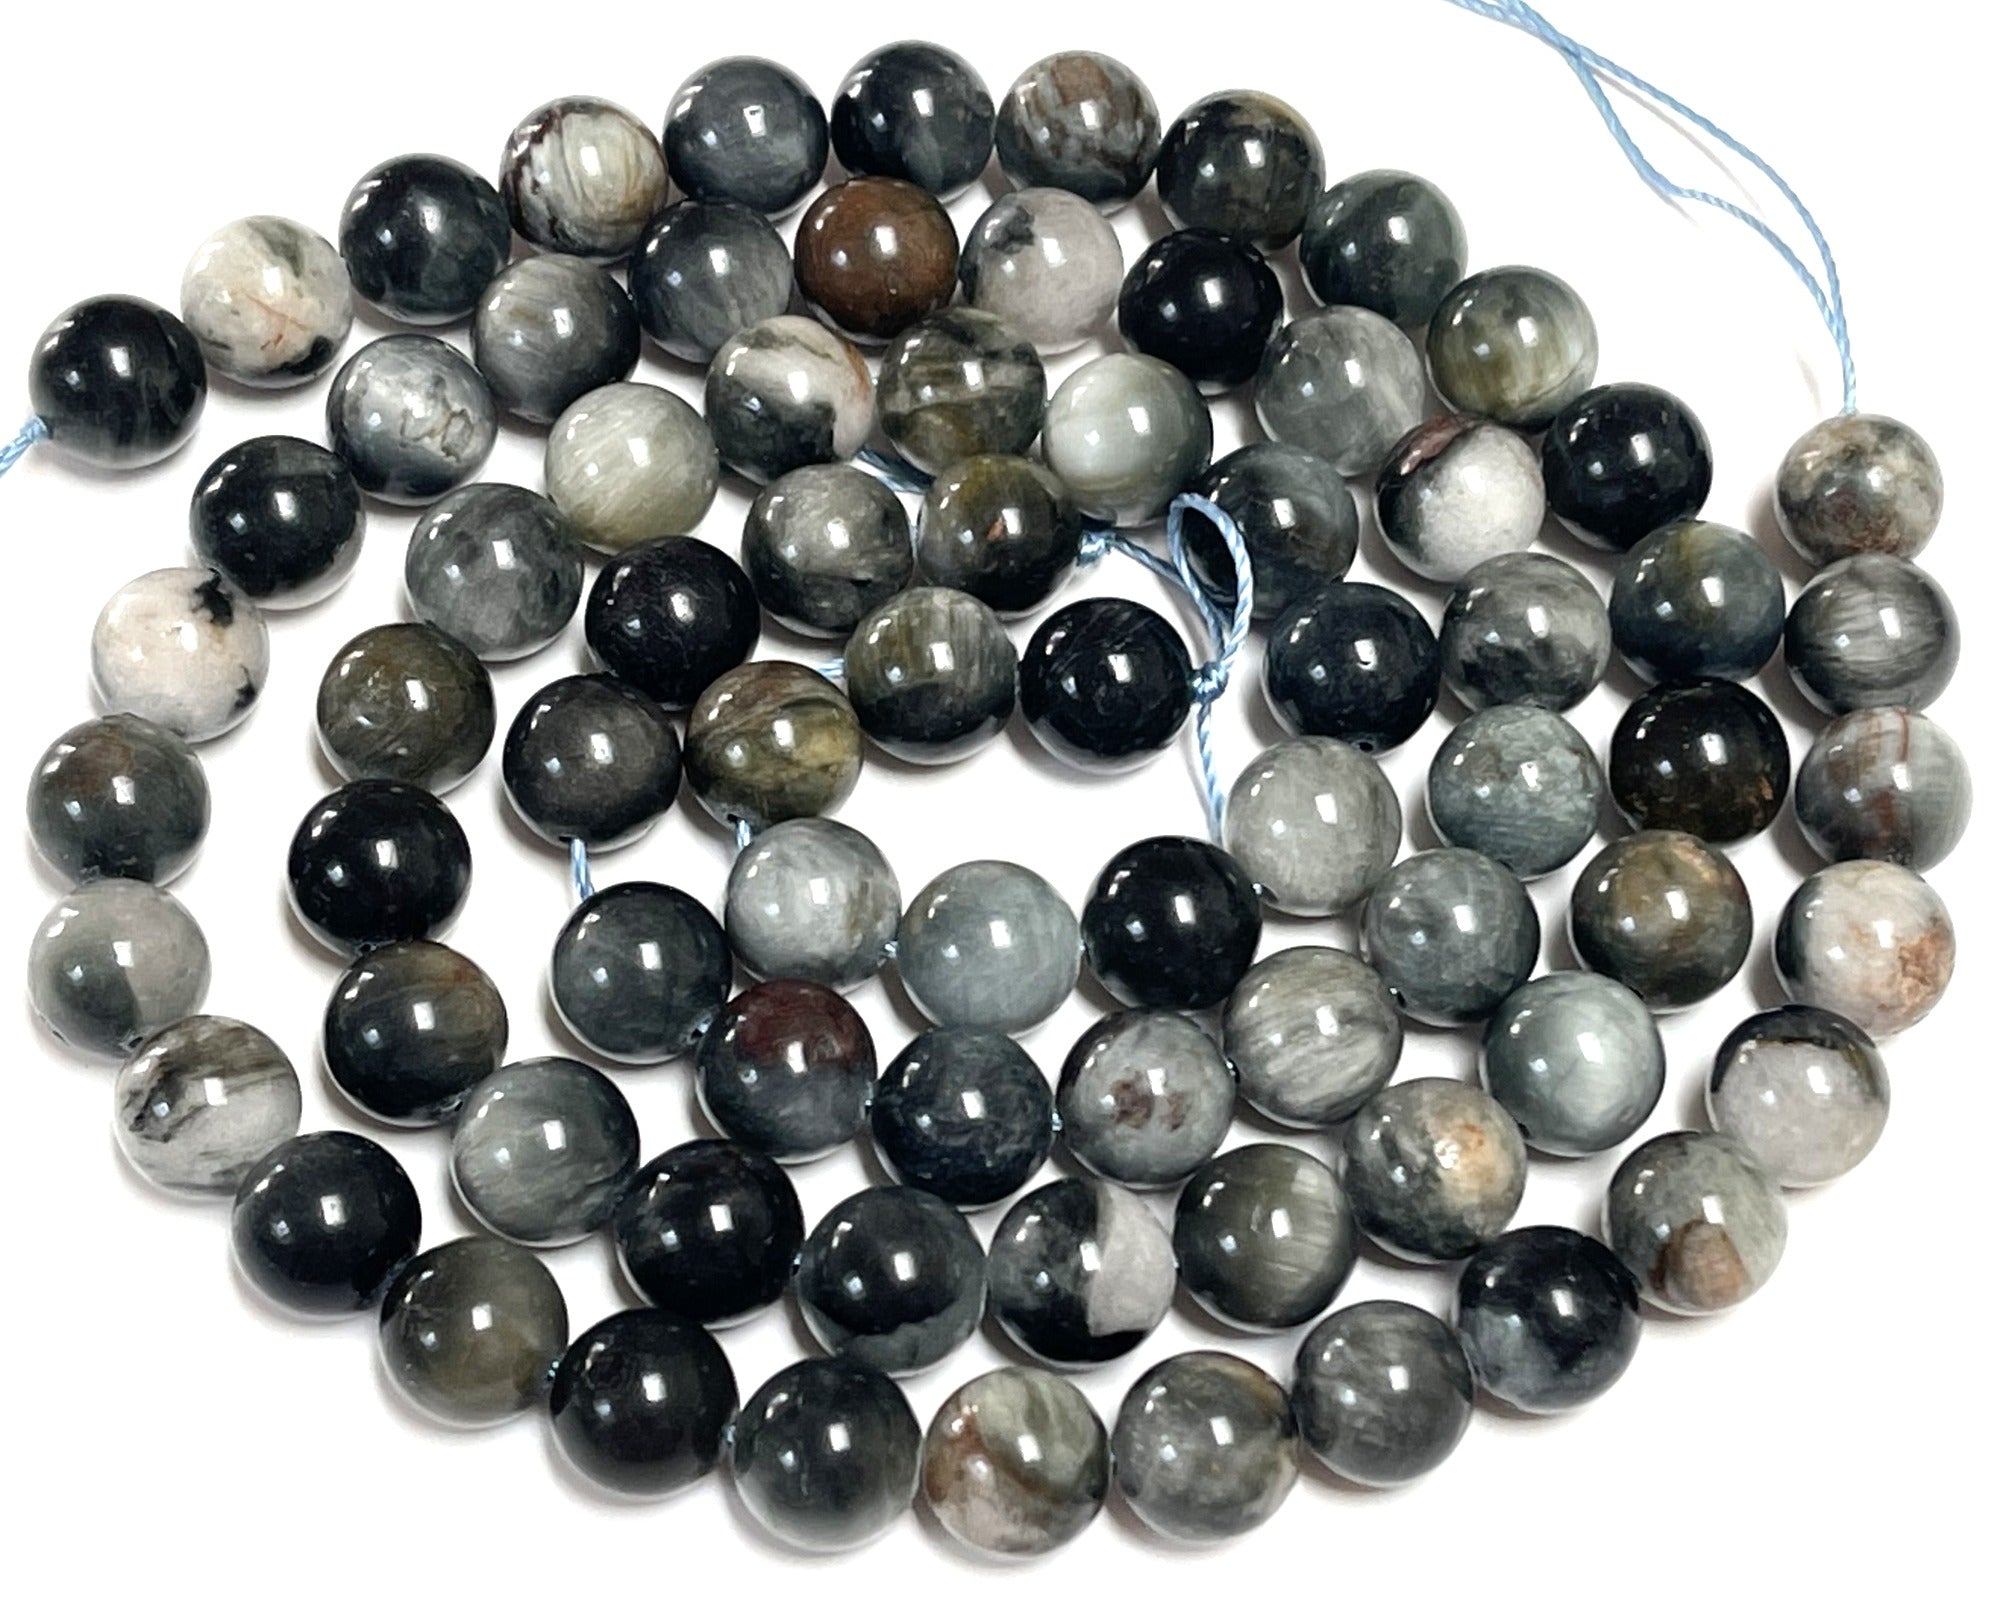 Eagle Eye 10mm round natural gemstone beads 15.5" strand